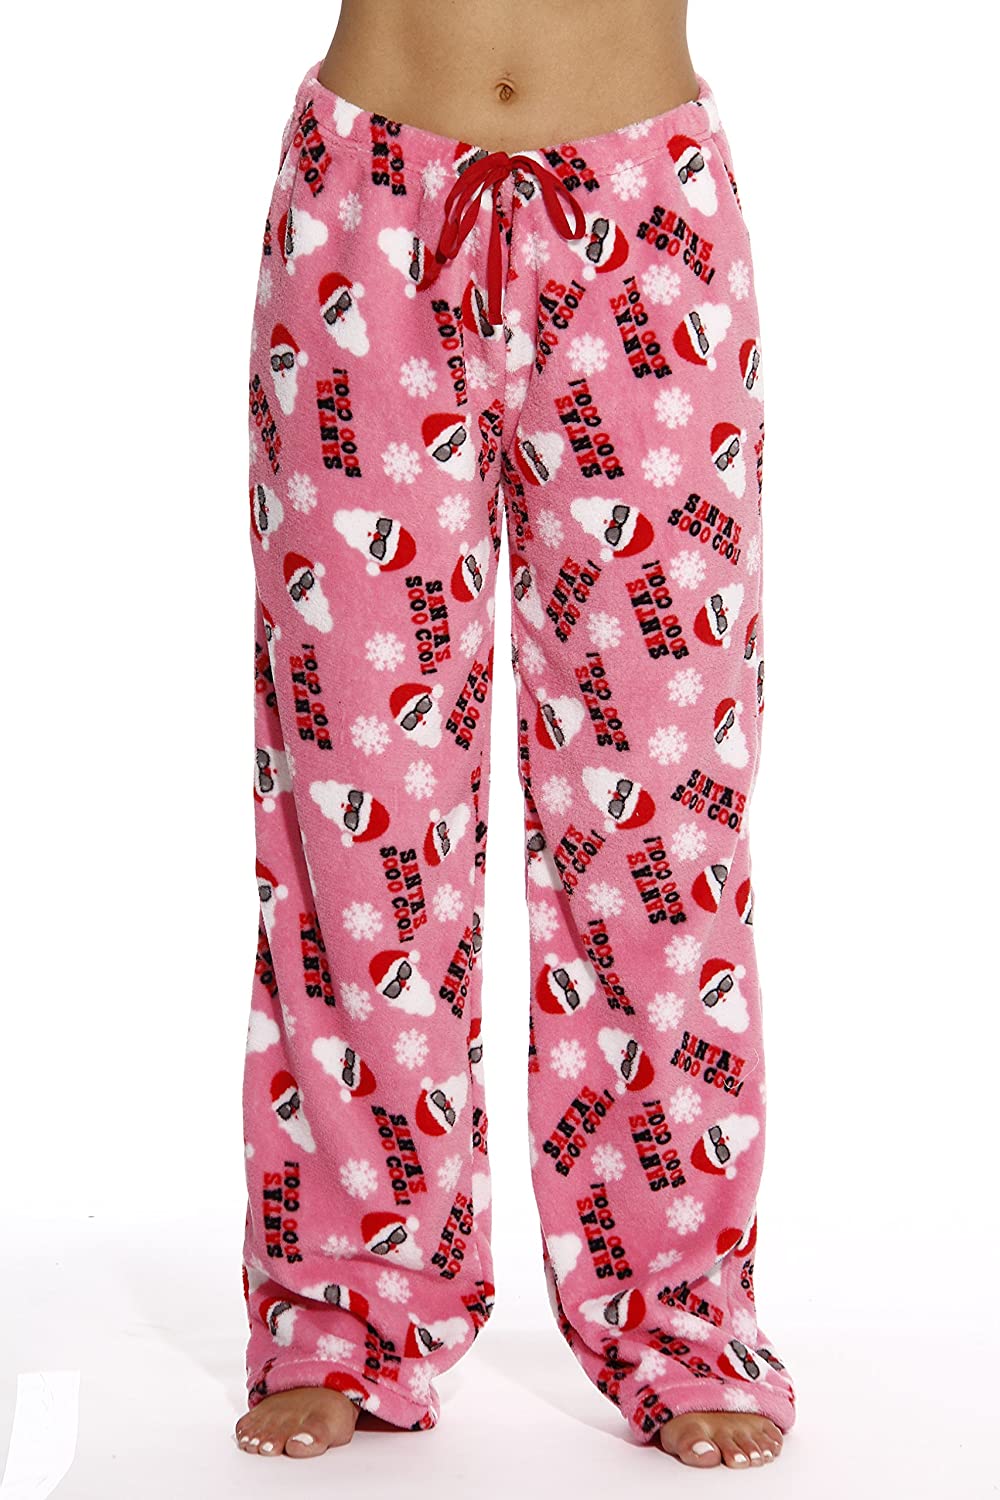 Women's Cute Character Print Plush Pajama Pants - Petite to Plus Size 